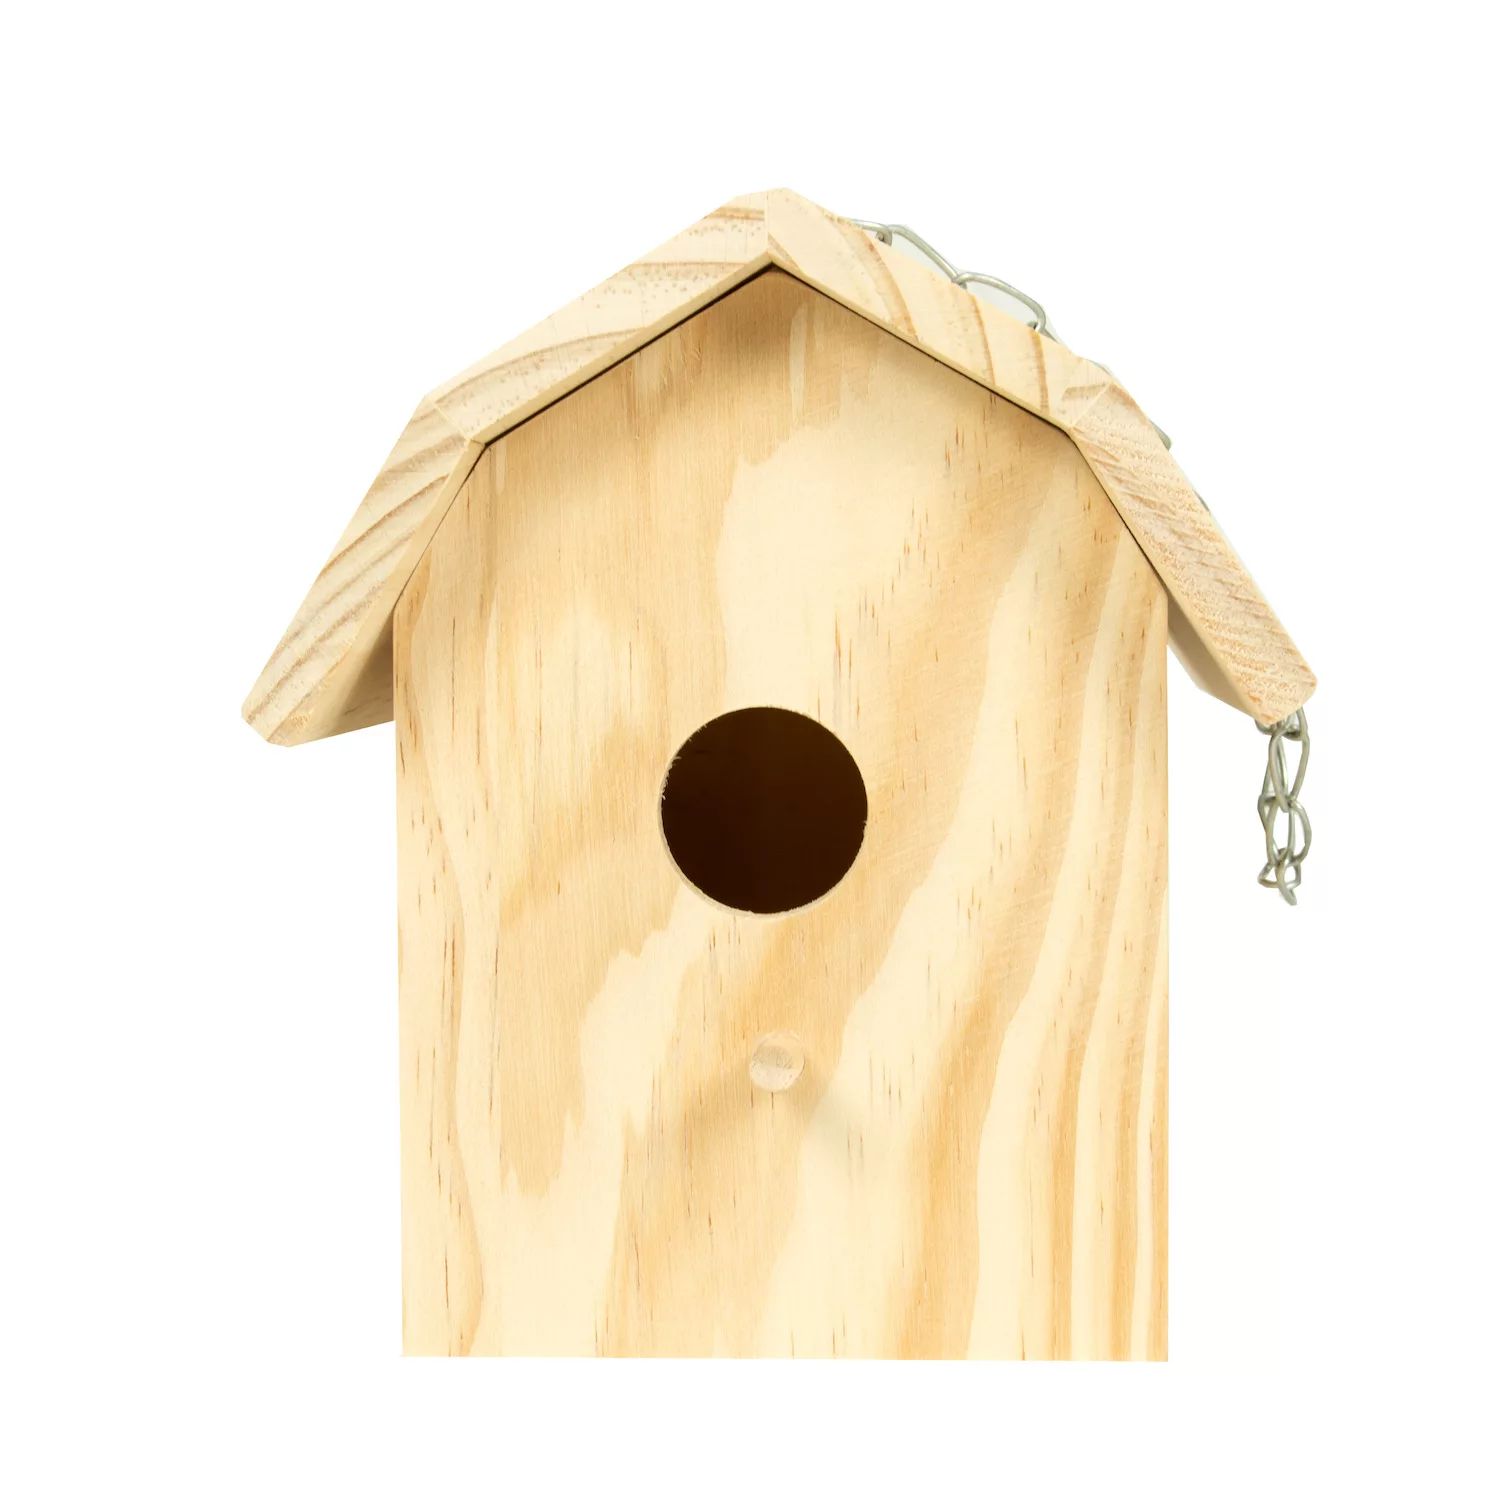 Комбинированный набор DYI для дома: кормушка для птиц и птичий домик Homeware